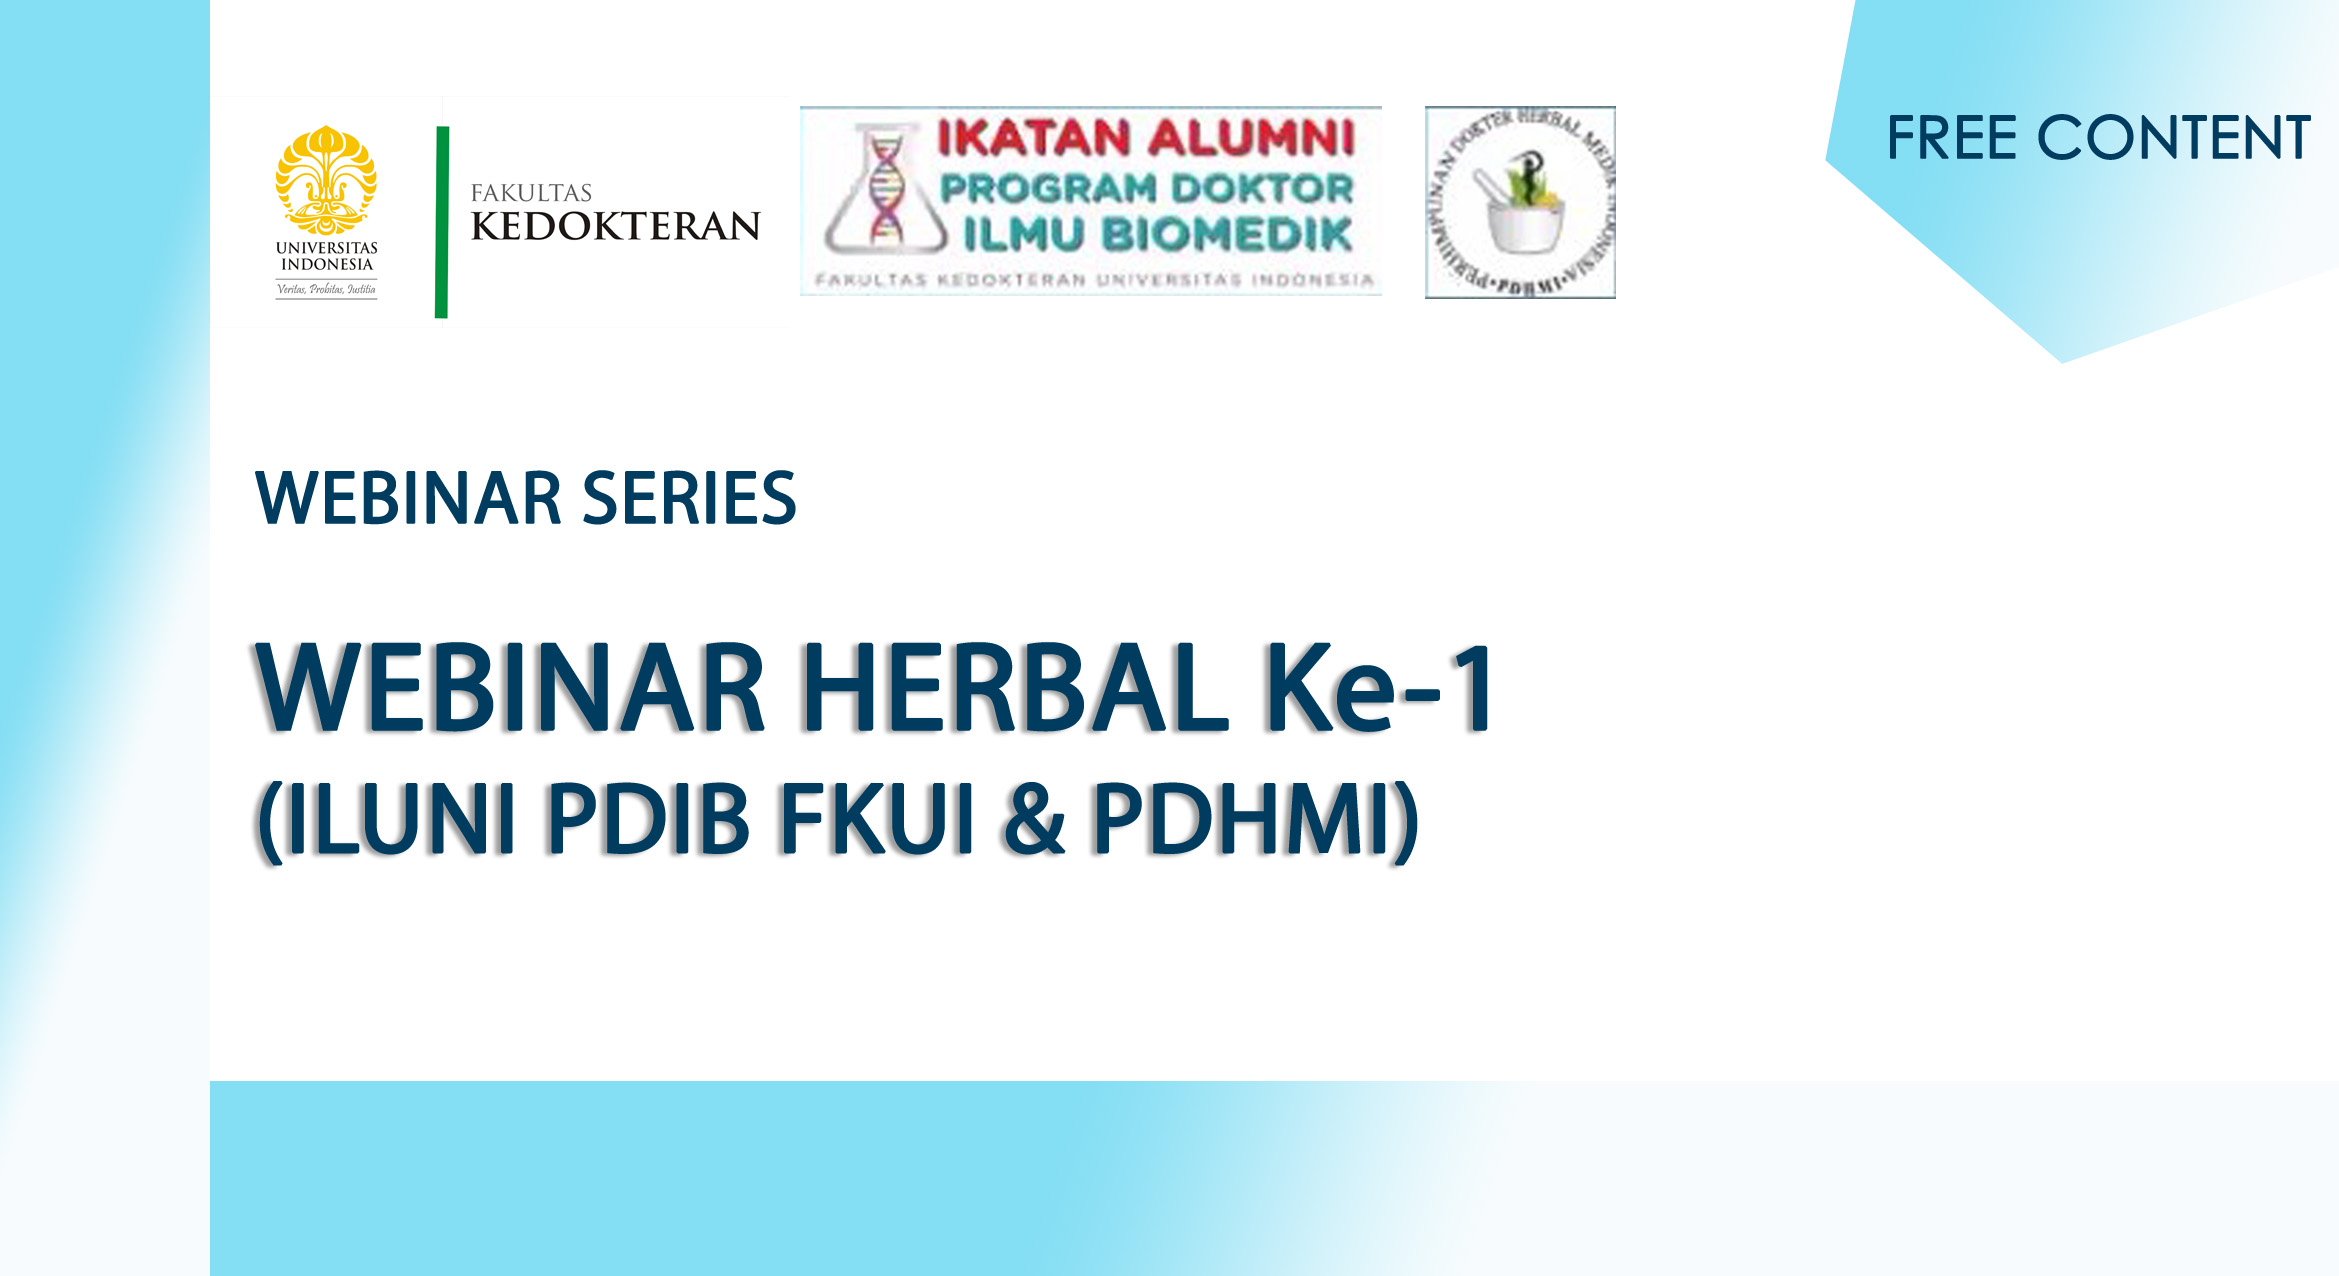 Webinar Herbal Series Ke-1 ILUNI PDIB & PDHMI Spesial Update COVID-19